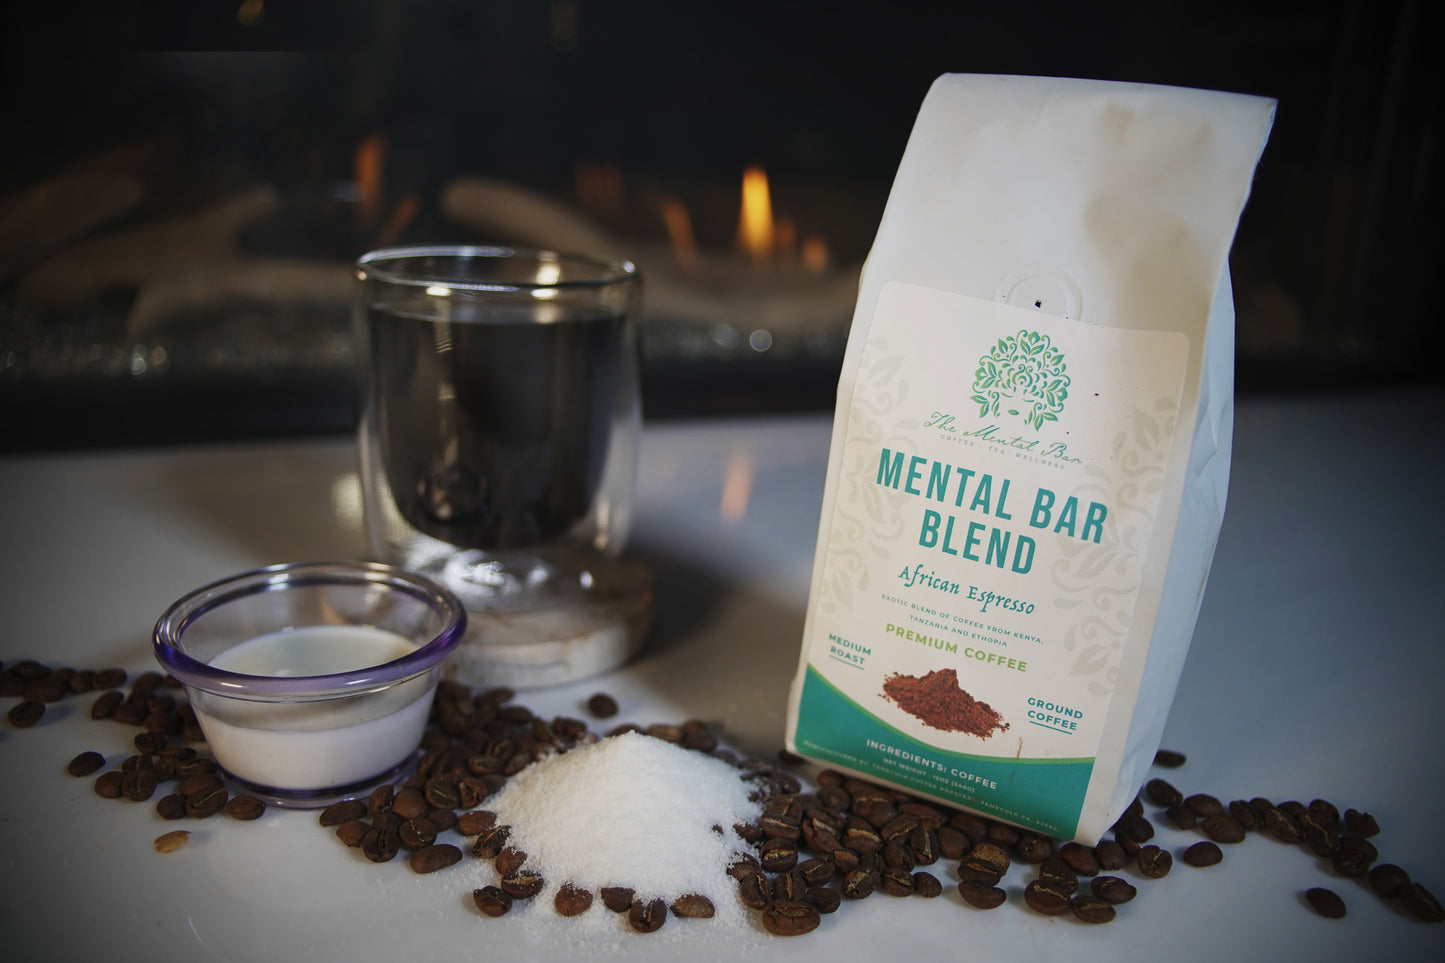 Mental Bar Blend (African Espresso)